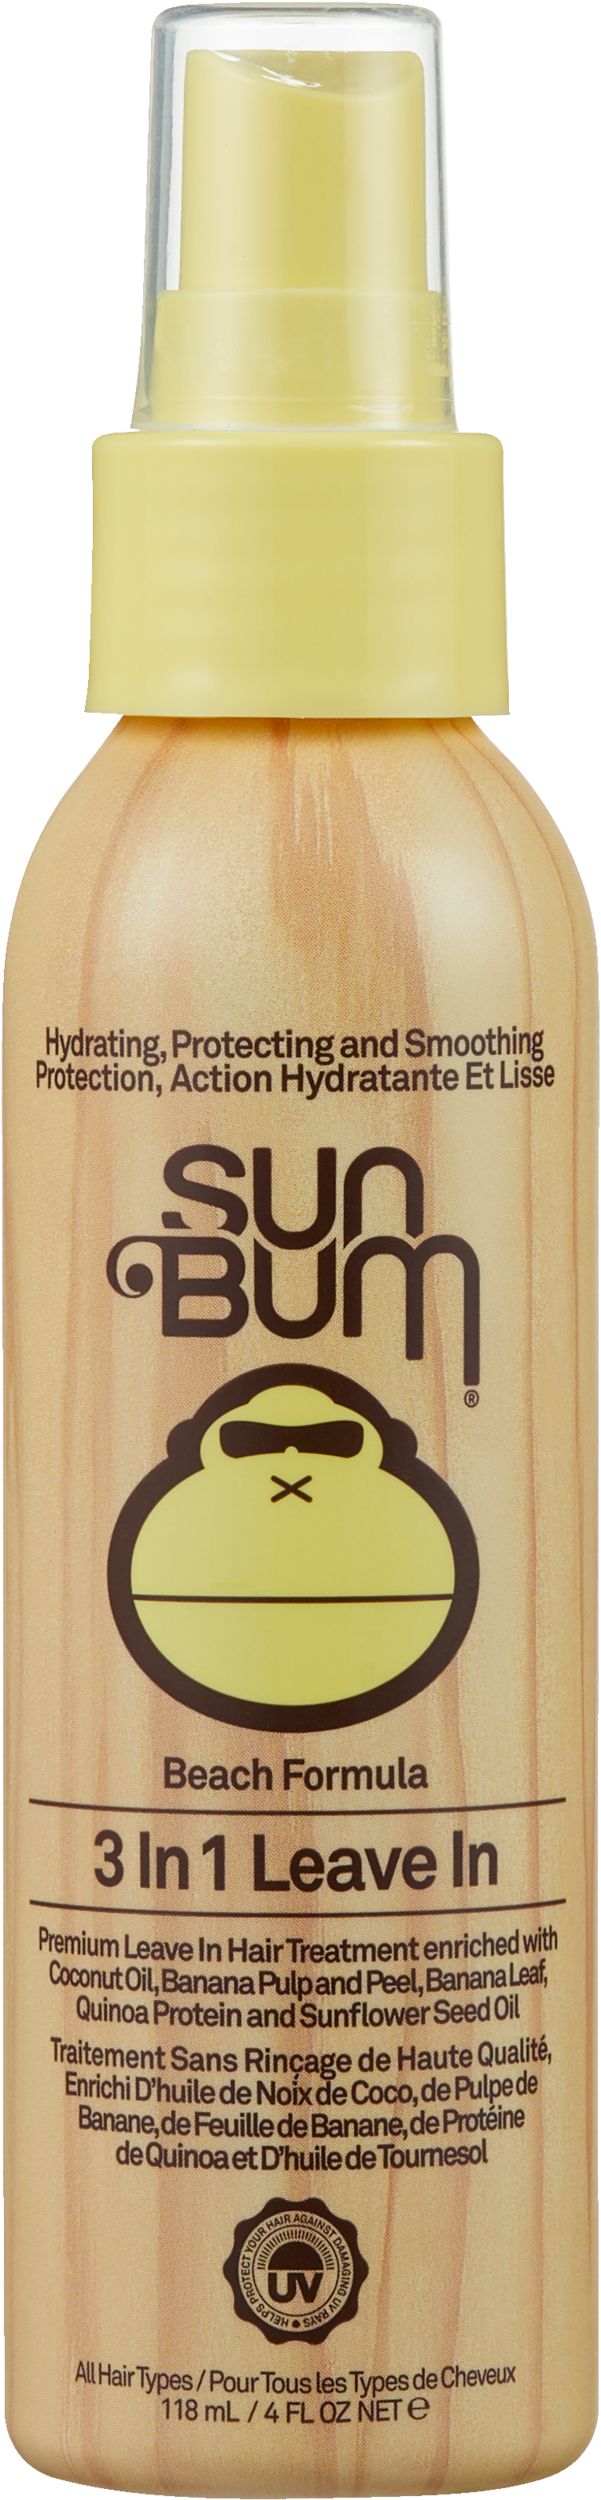 Sun Bum Beach Formula 3-in-1 Leave-In Conditioner - 4 fl oz bottle